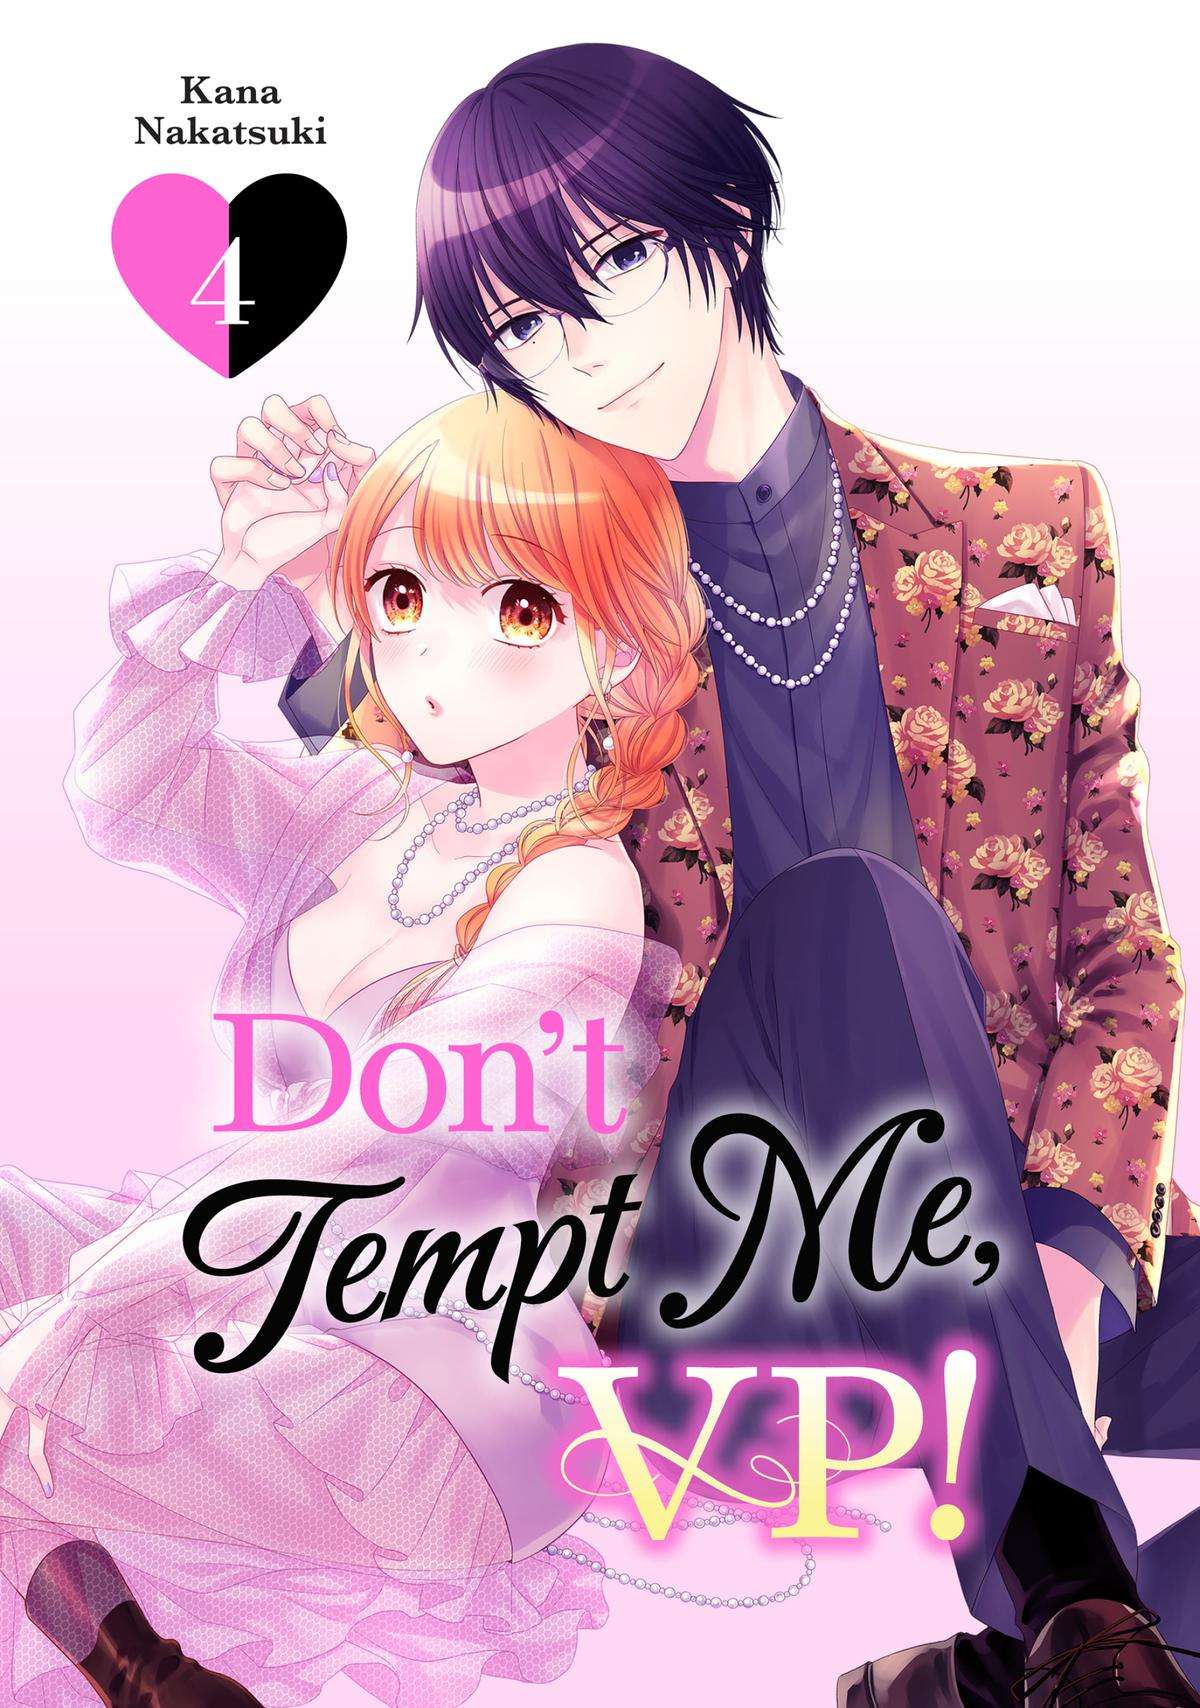 Don't Tempt Me, Vp! - chapter 13 - #1